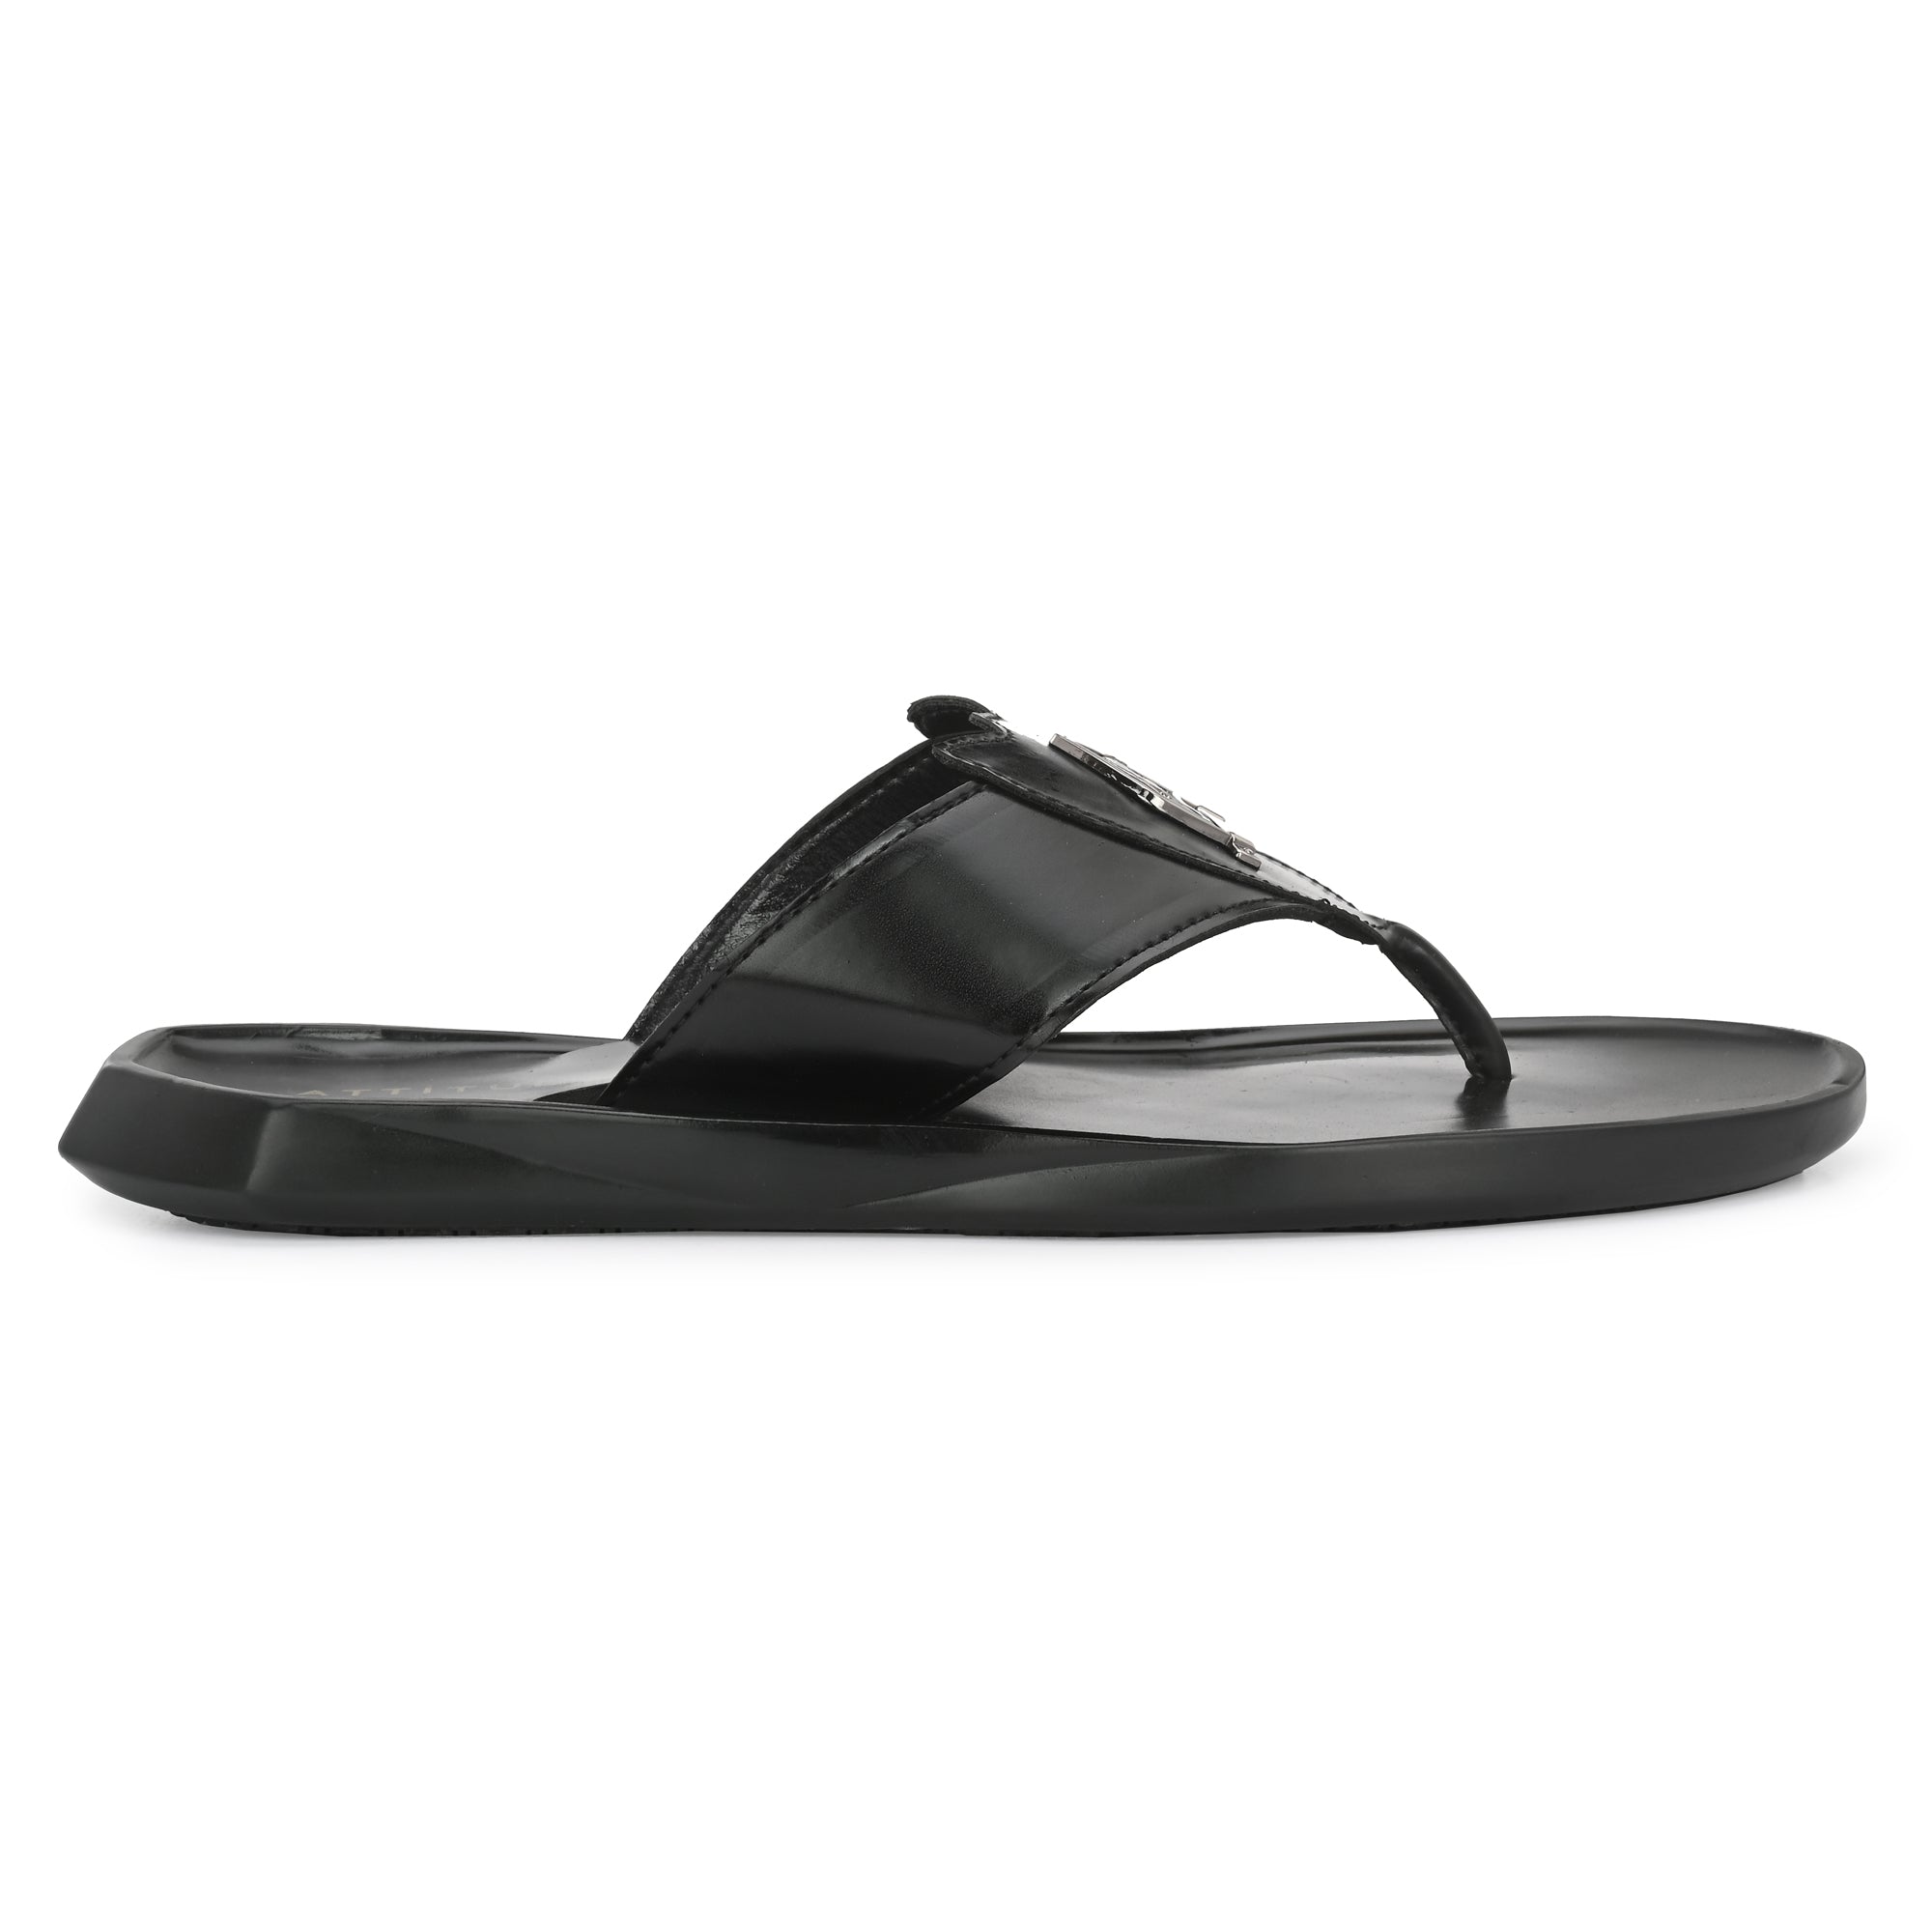 attitudist-black-stylish-thong-slippers-for-men